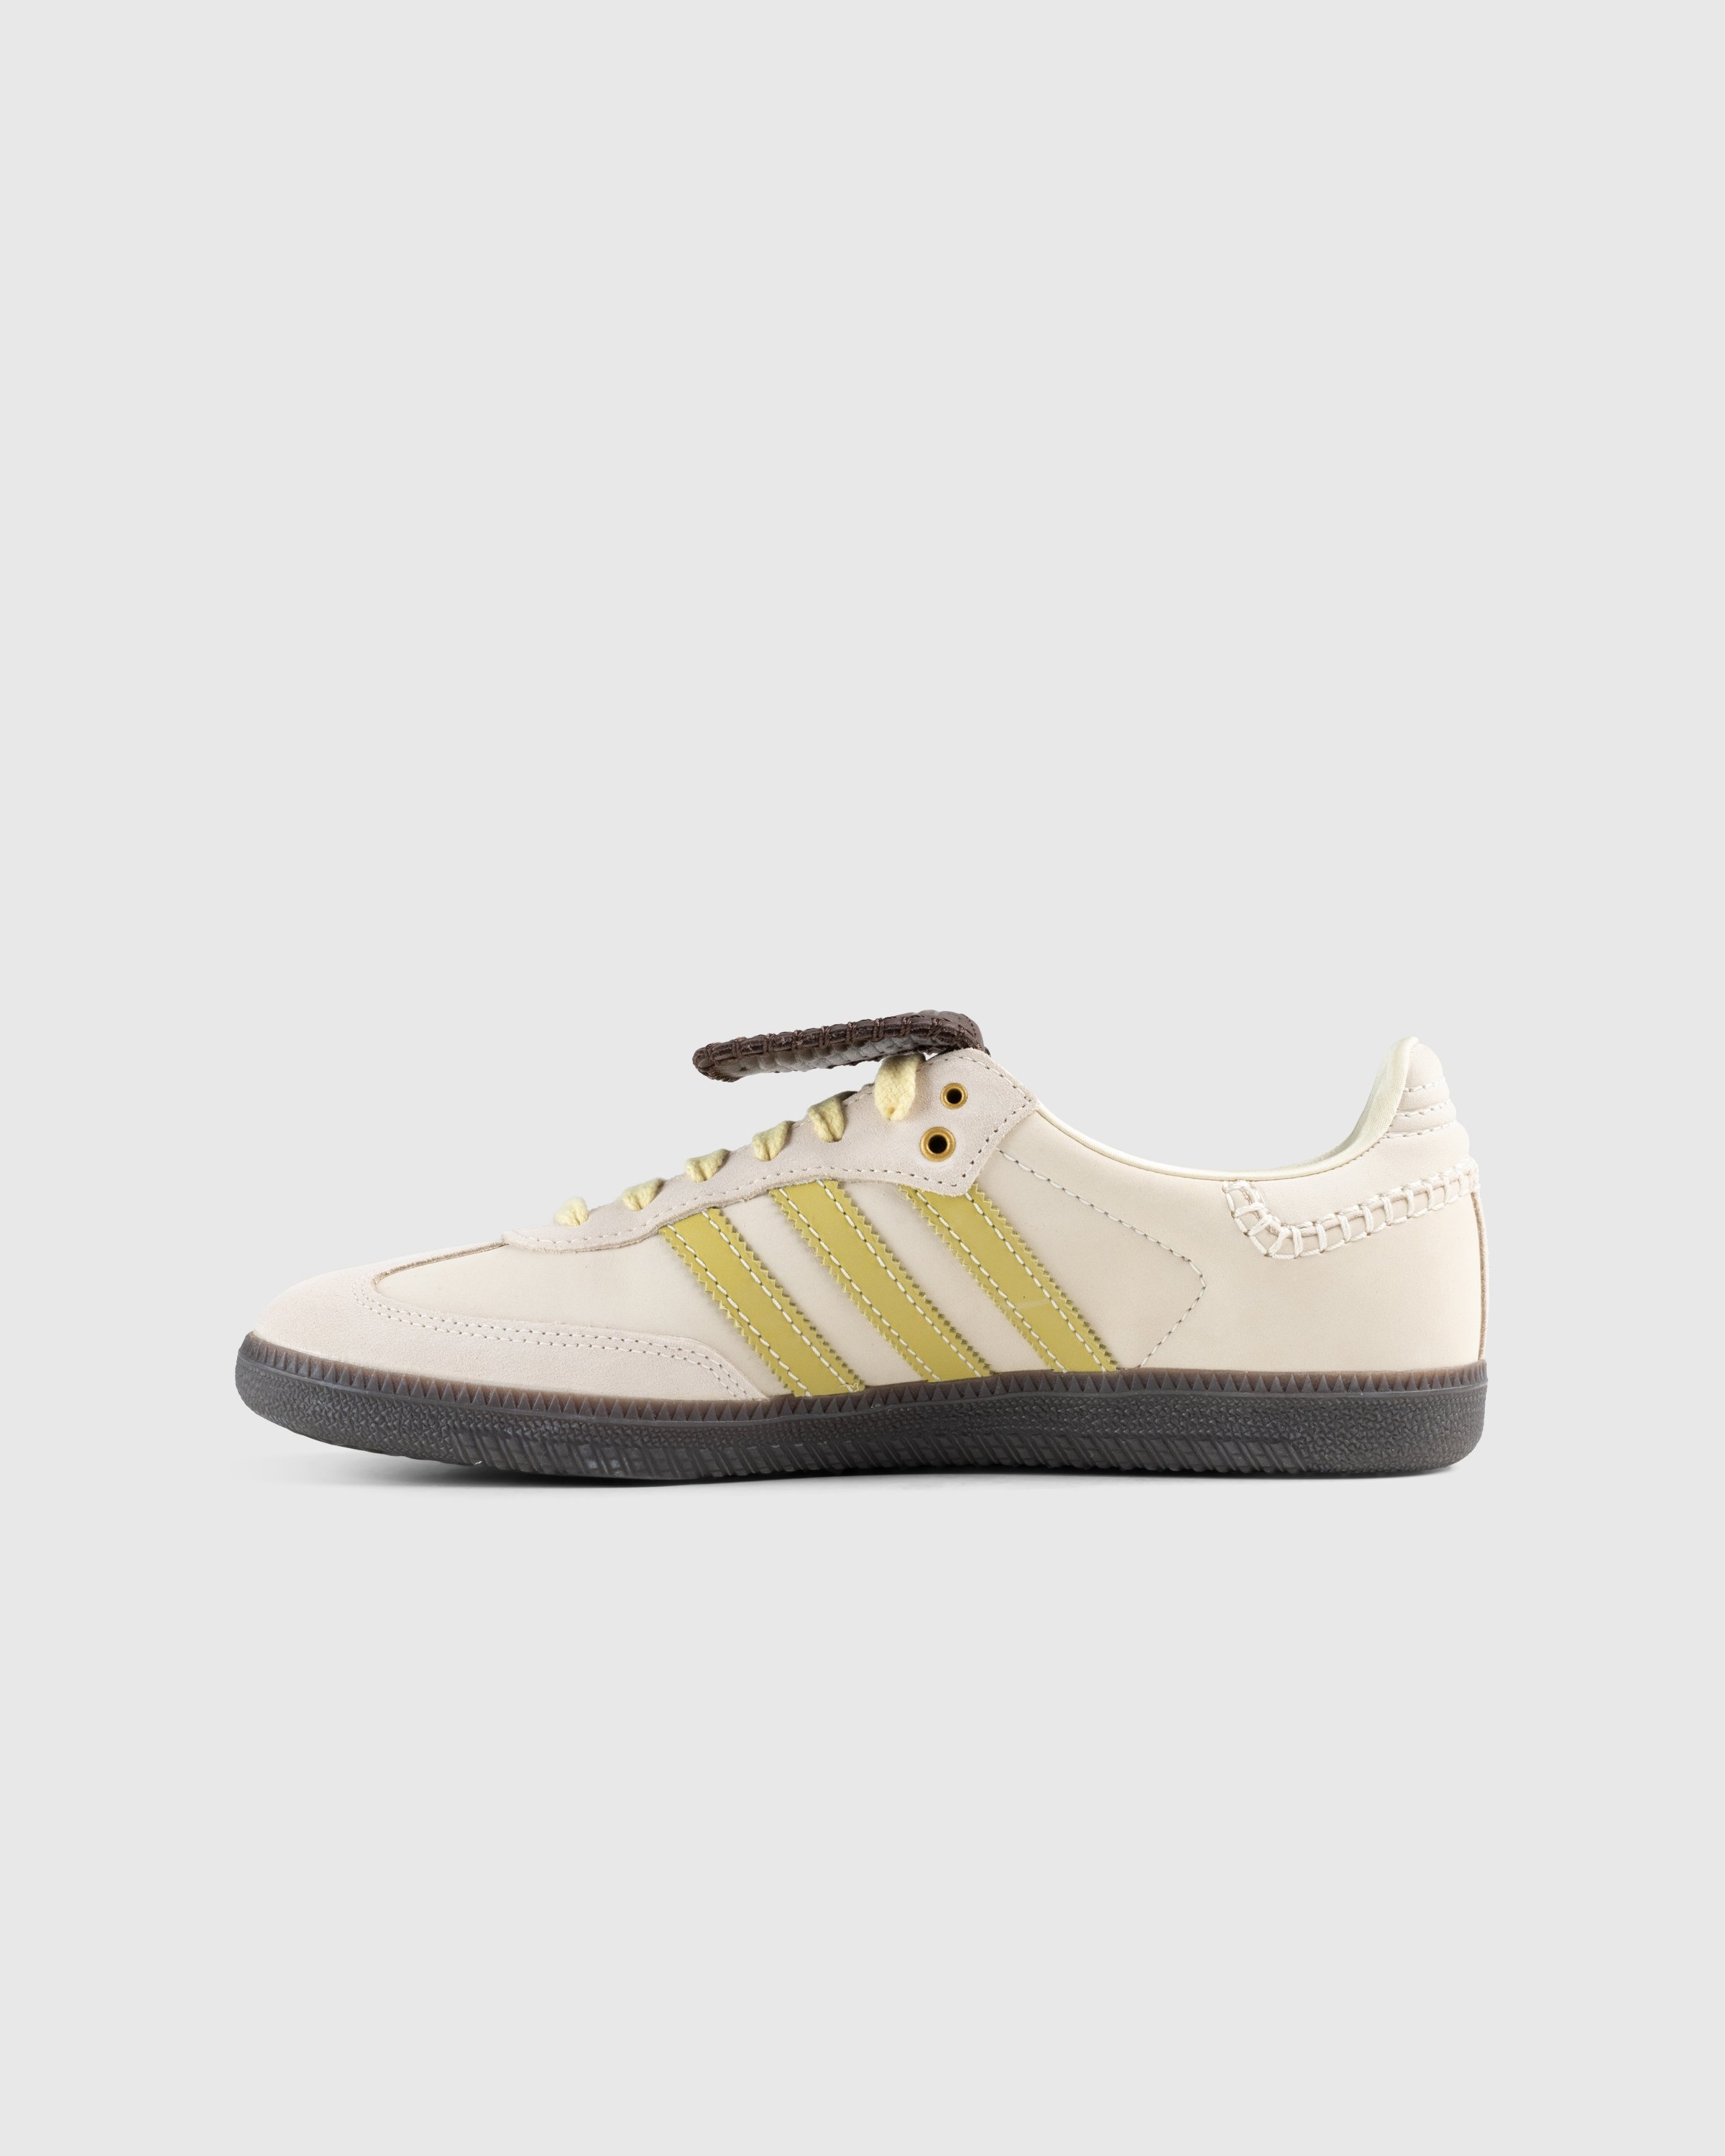 Adidas x Wales Bonner – Samba Nubuck Ecru Tint/Almost Yellow/Dark Brown - Sneakers - Beige - Image 2